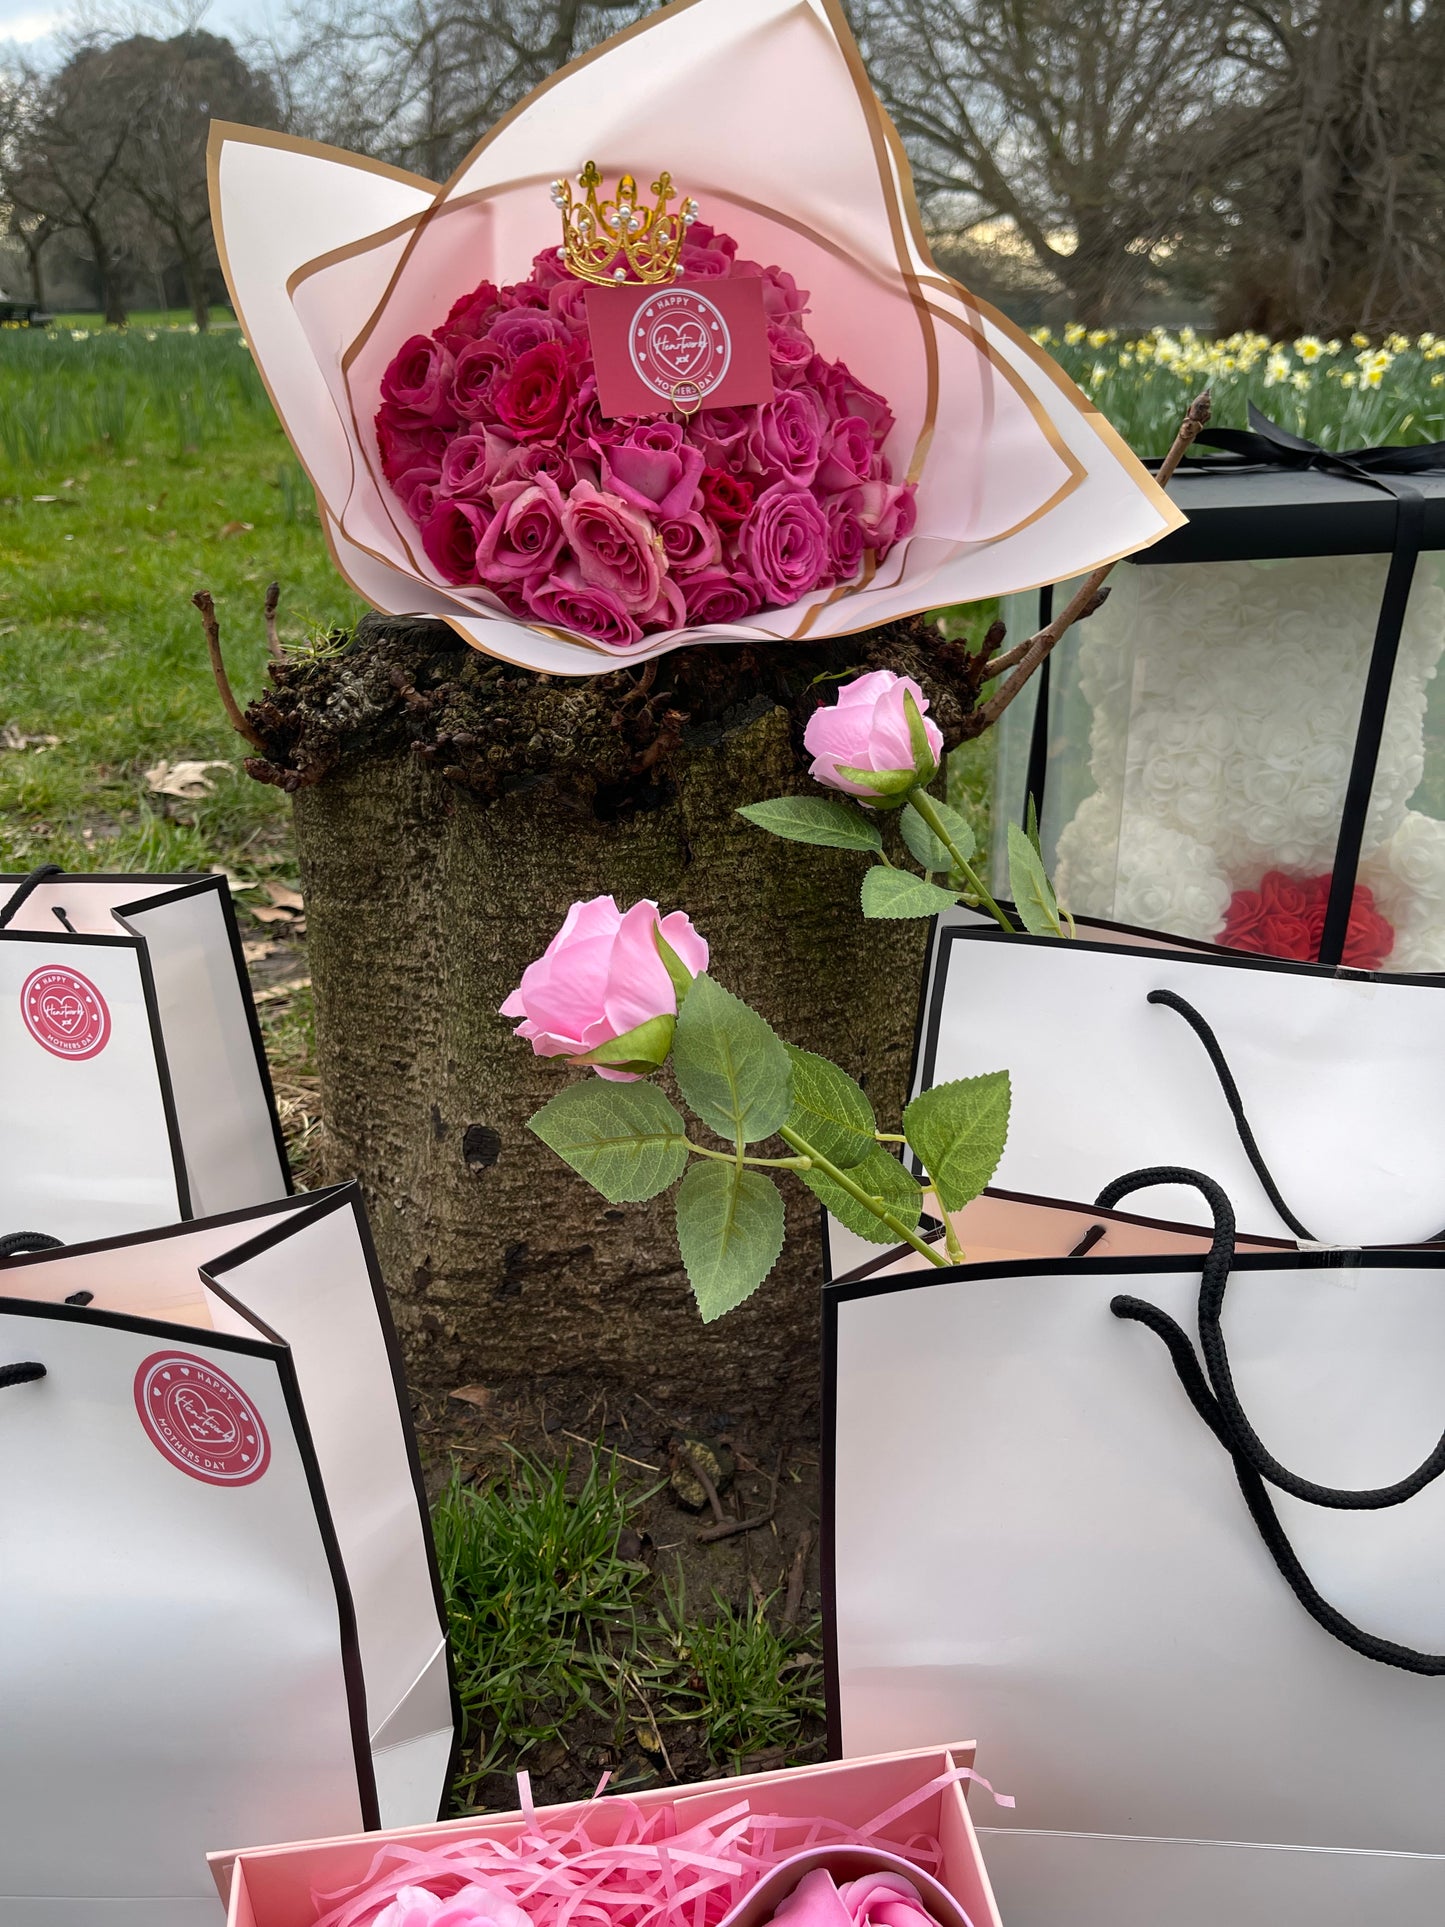 50 Pink Rose Bouquet